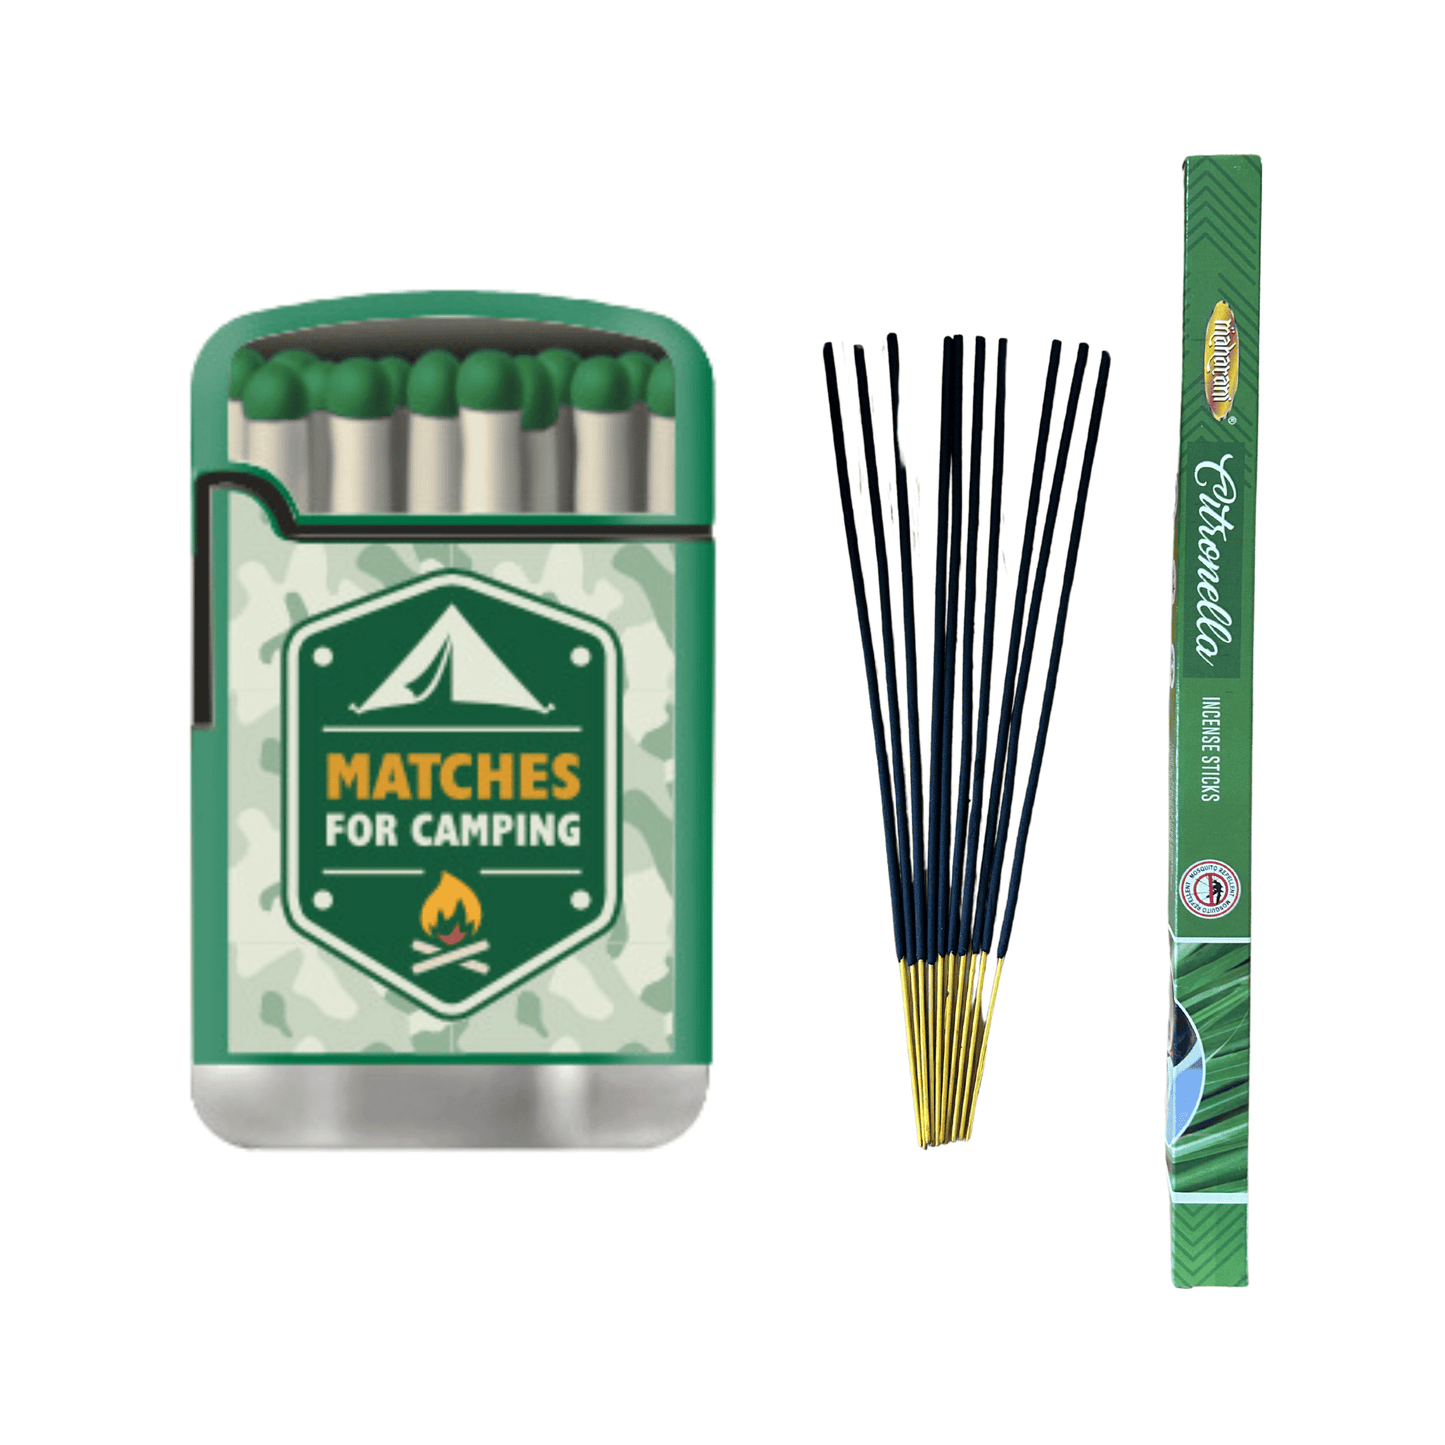 Zengaz ZL-3 Lighter + Free Incense Sticks